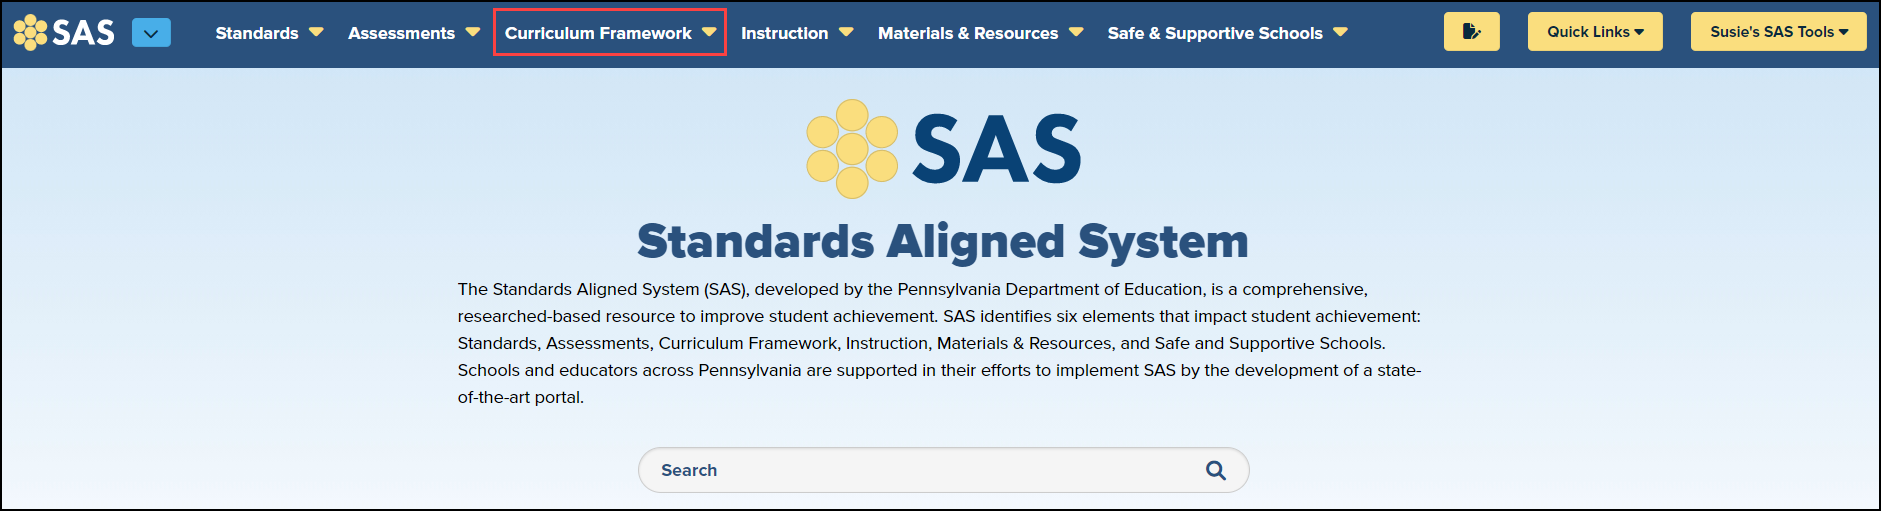 header of SAS website with curriculum framework button highlighted